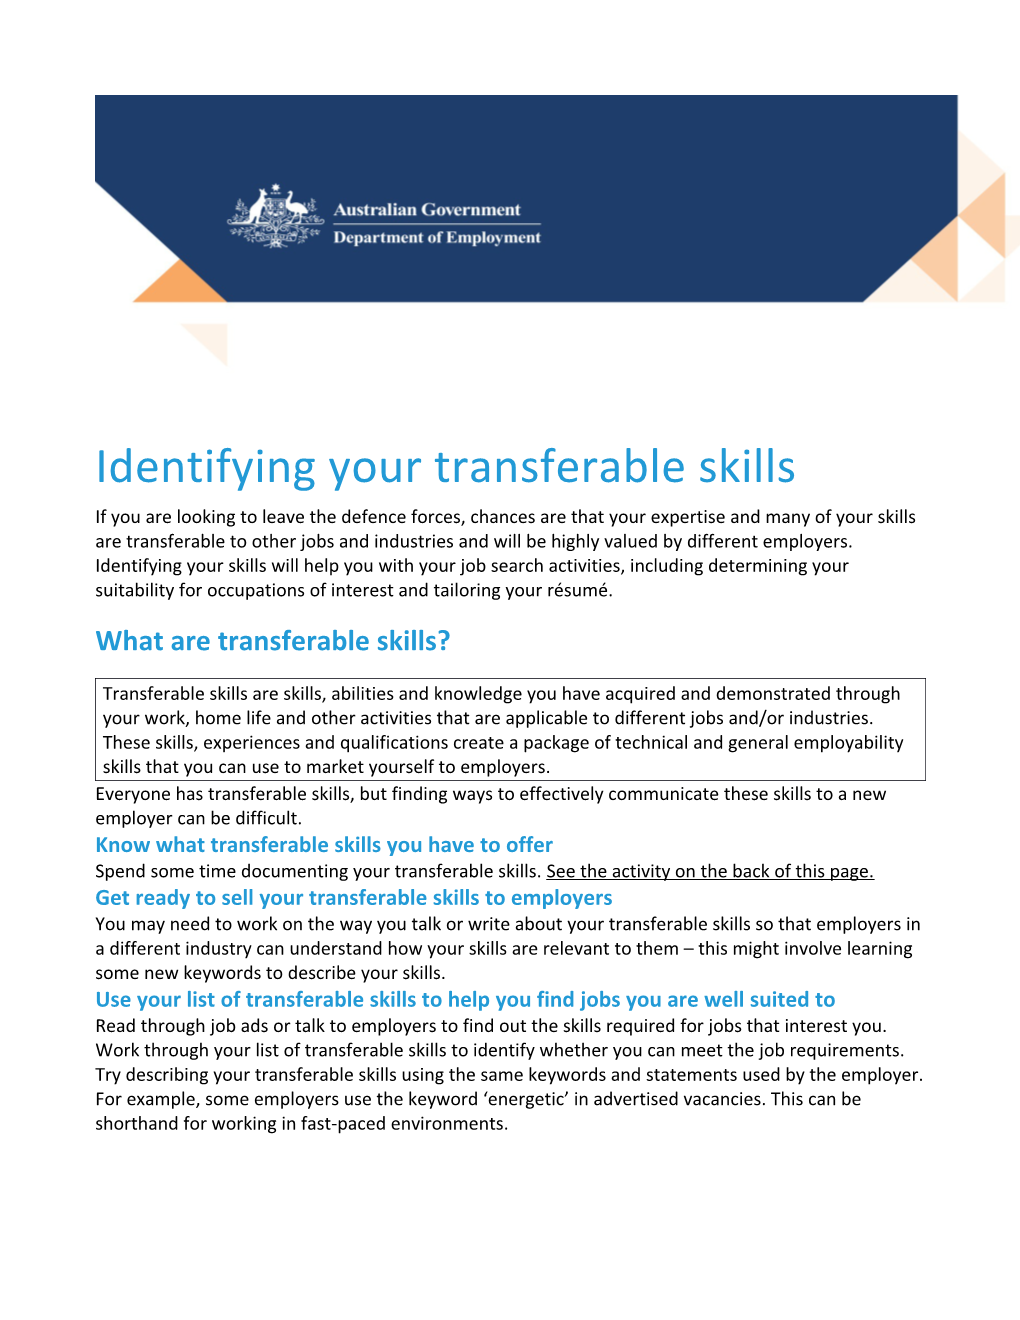 Identifying Your Transferable Skills